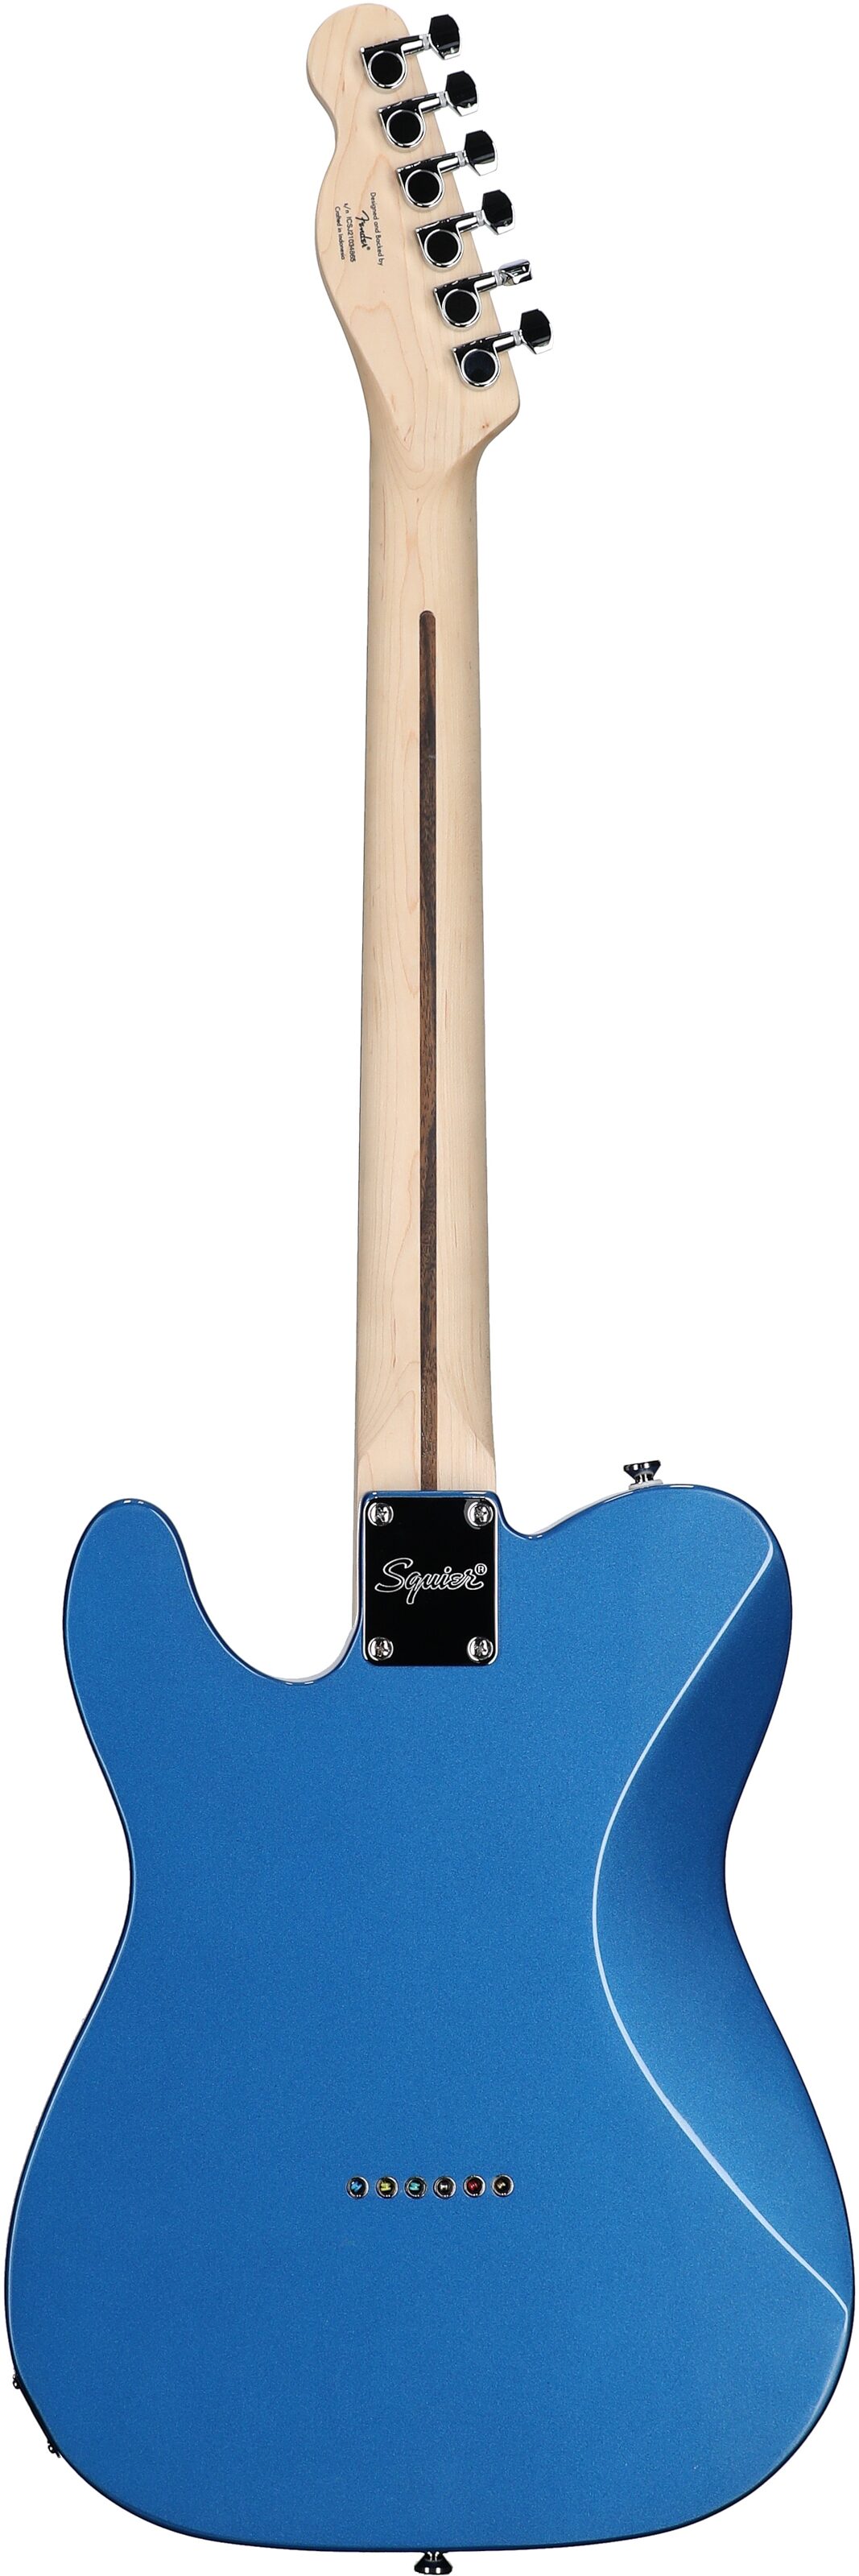 Squier Affinity Telecaster Electric Guitar, Laurel Fingerboard